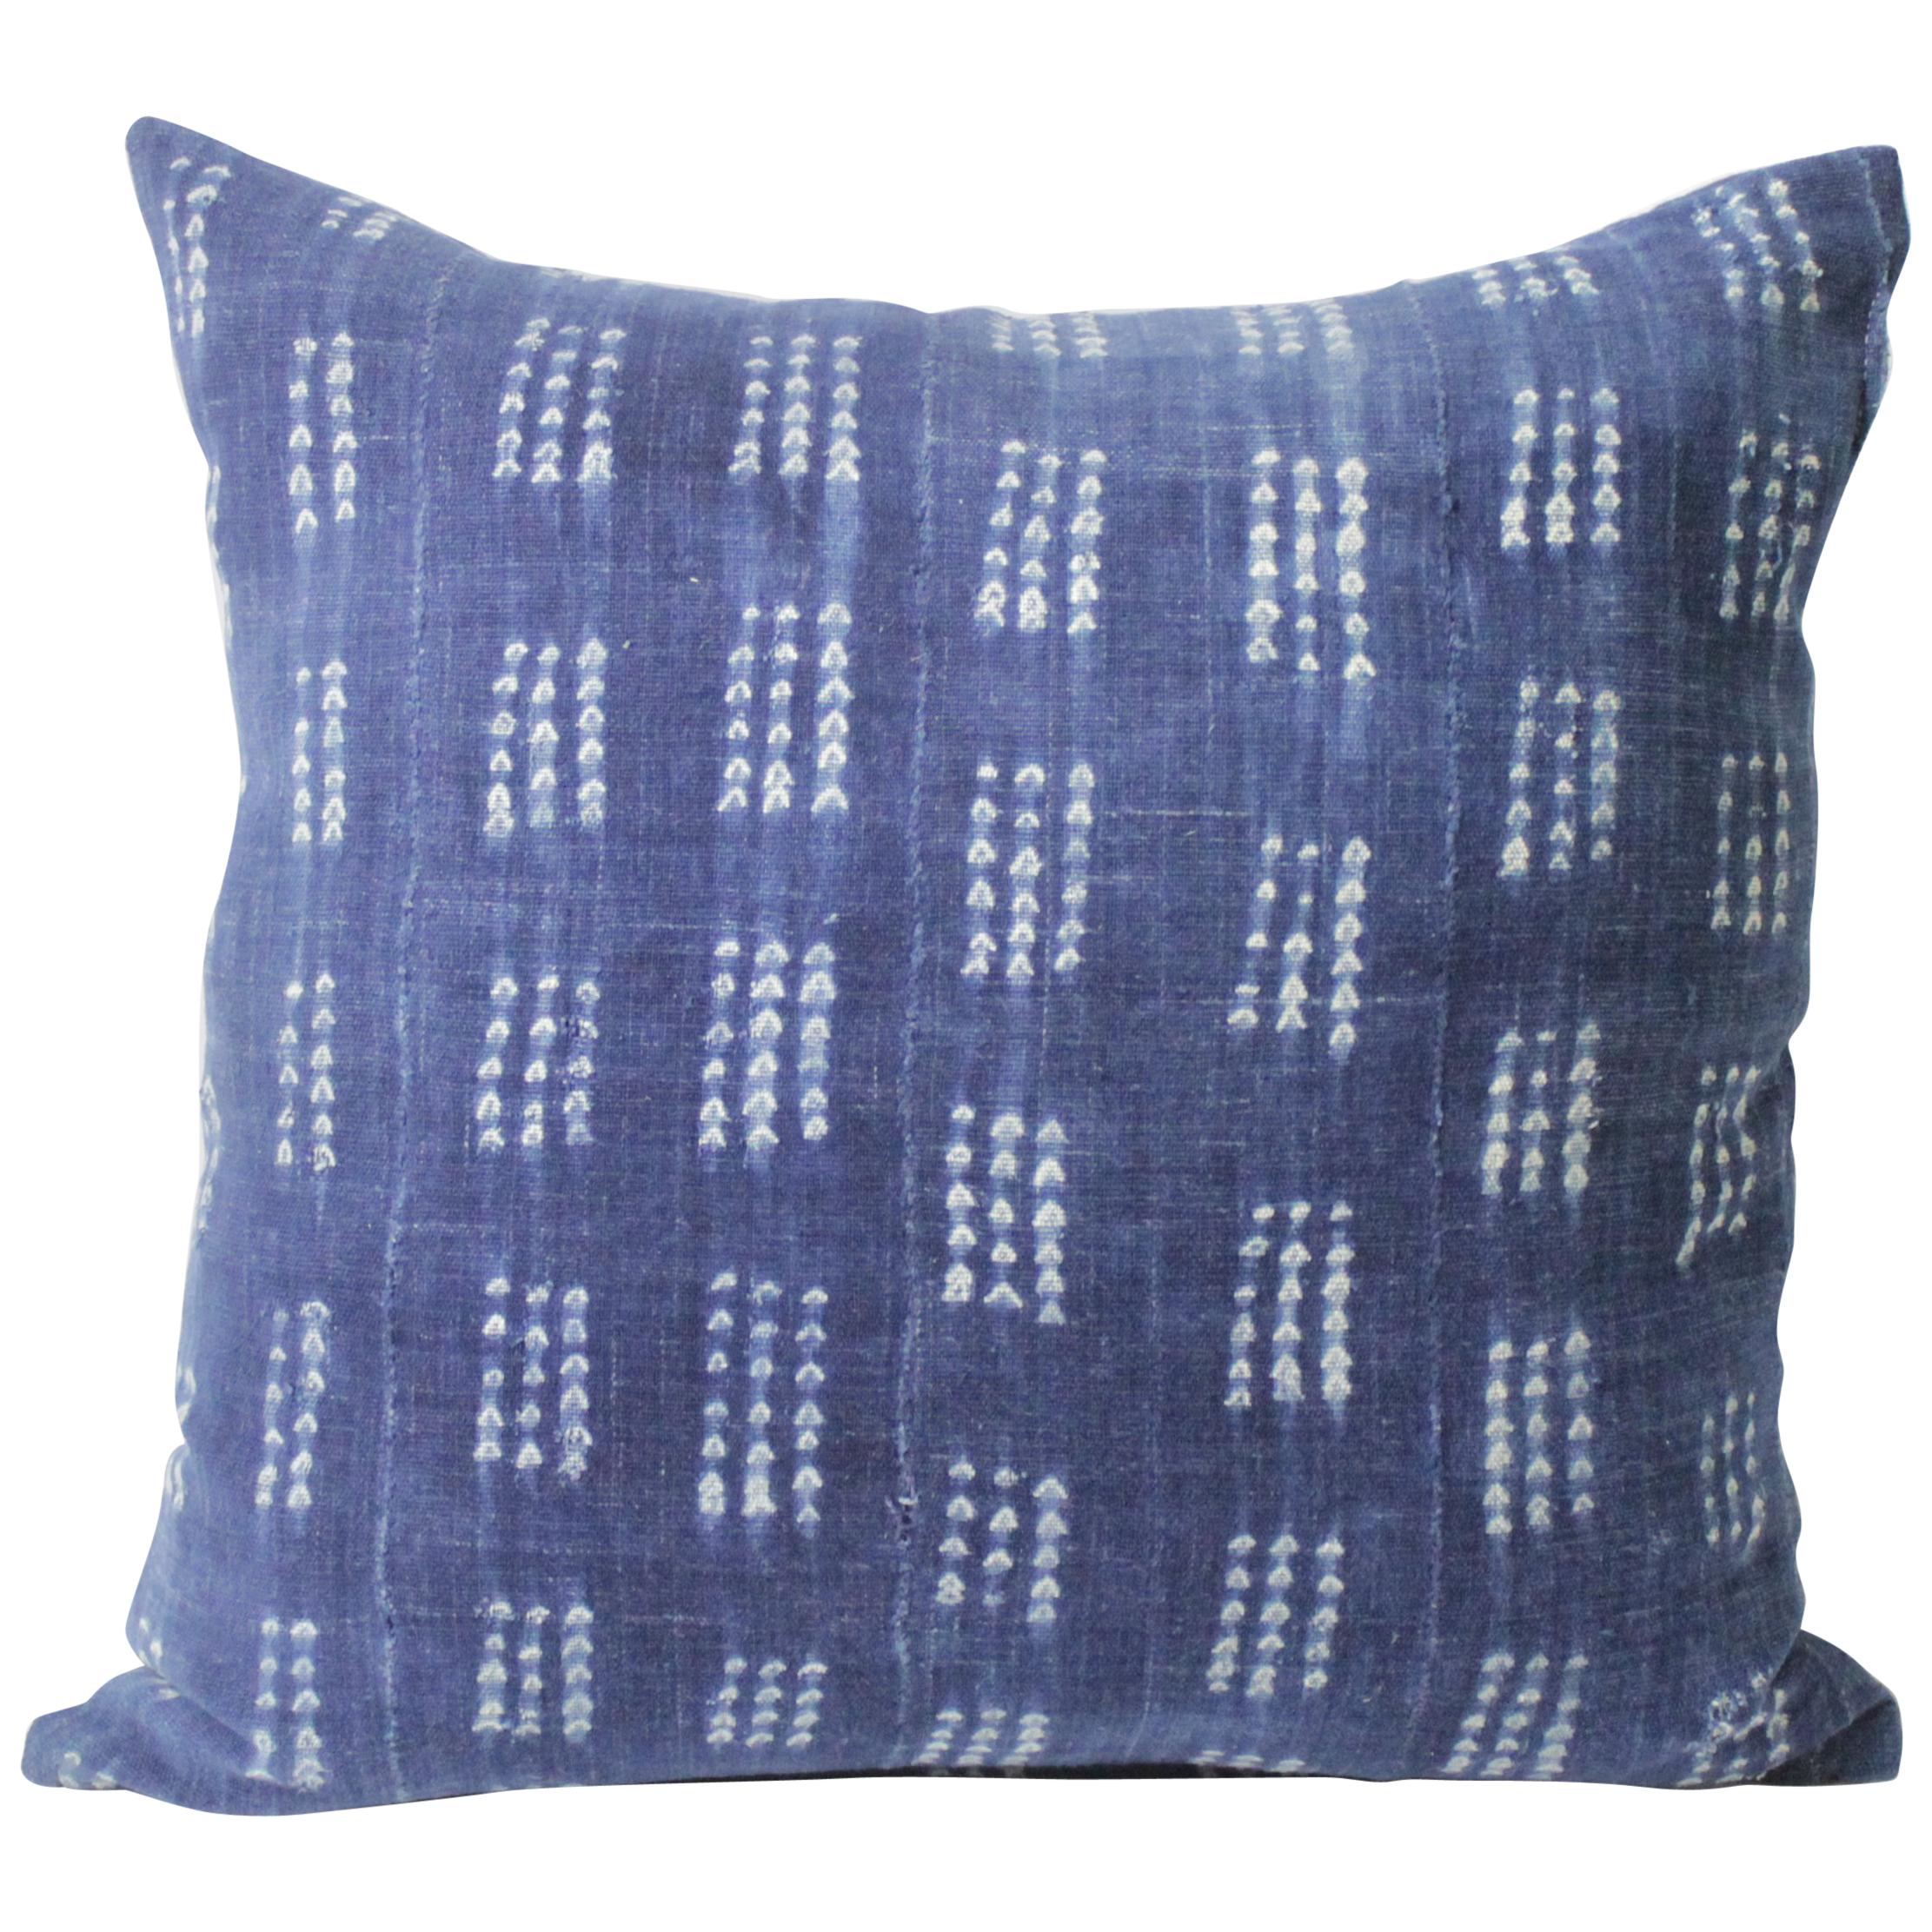 Antique Indigo Blue and White Batik Accent Pillow